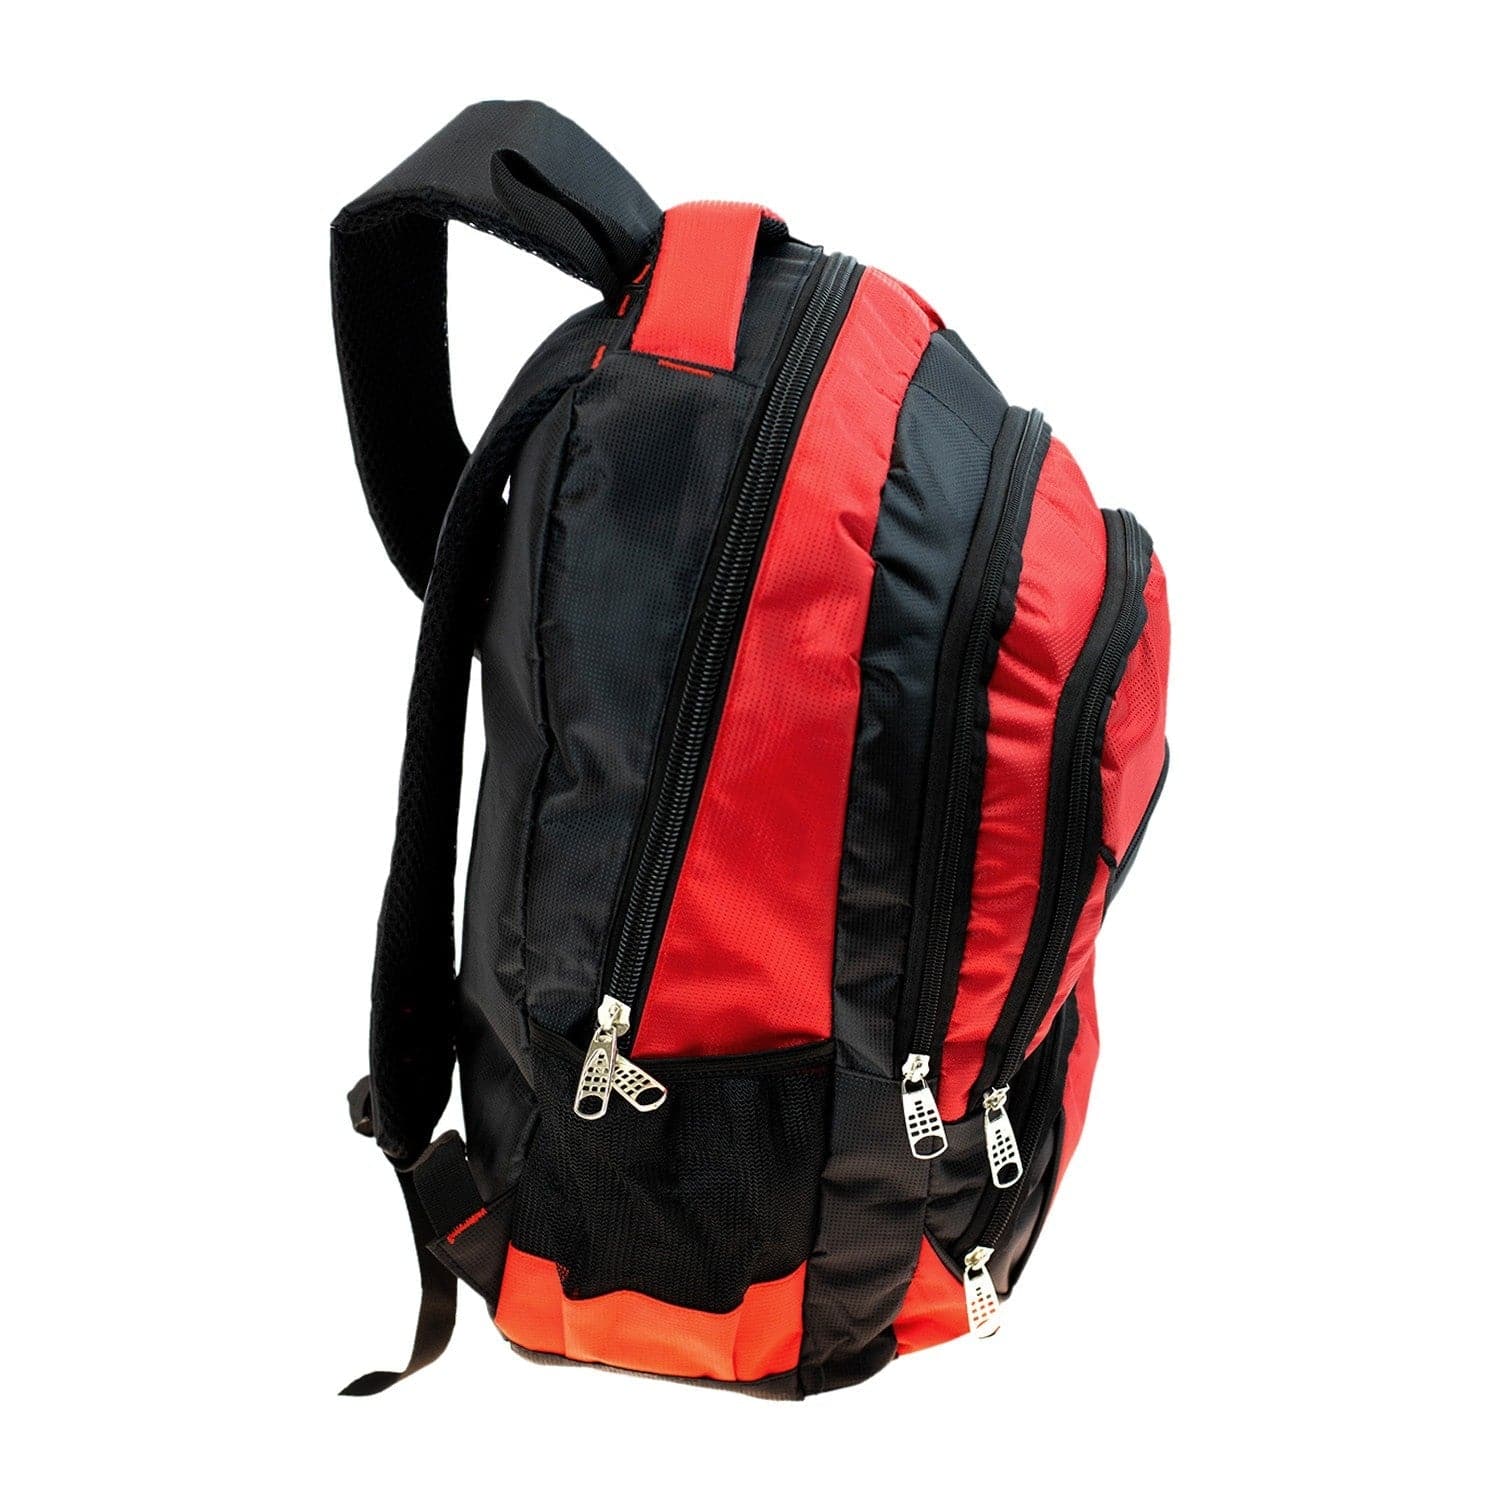 16" Premium Padded Wholesale Backpacks in 6 Assorted Colors - Bulk Case of 24 Bookbags